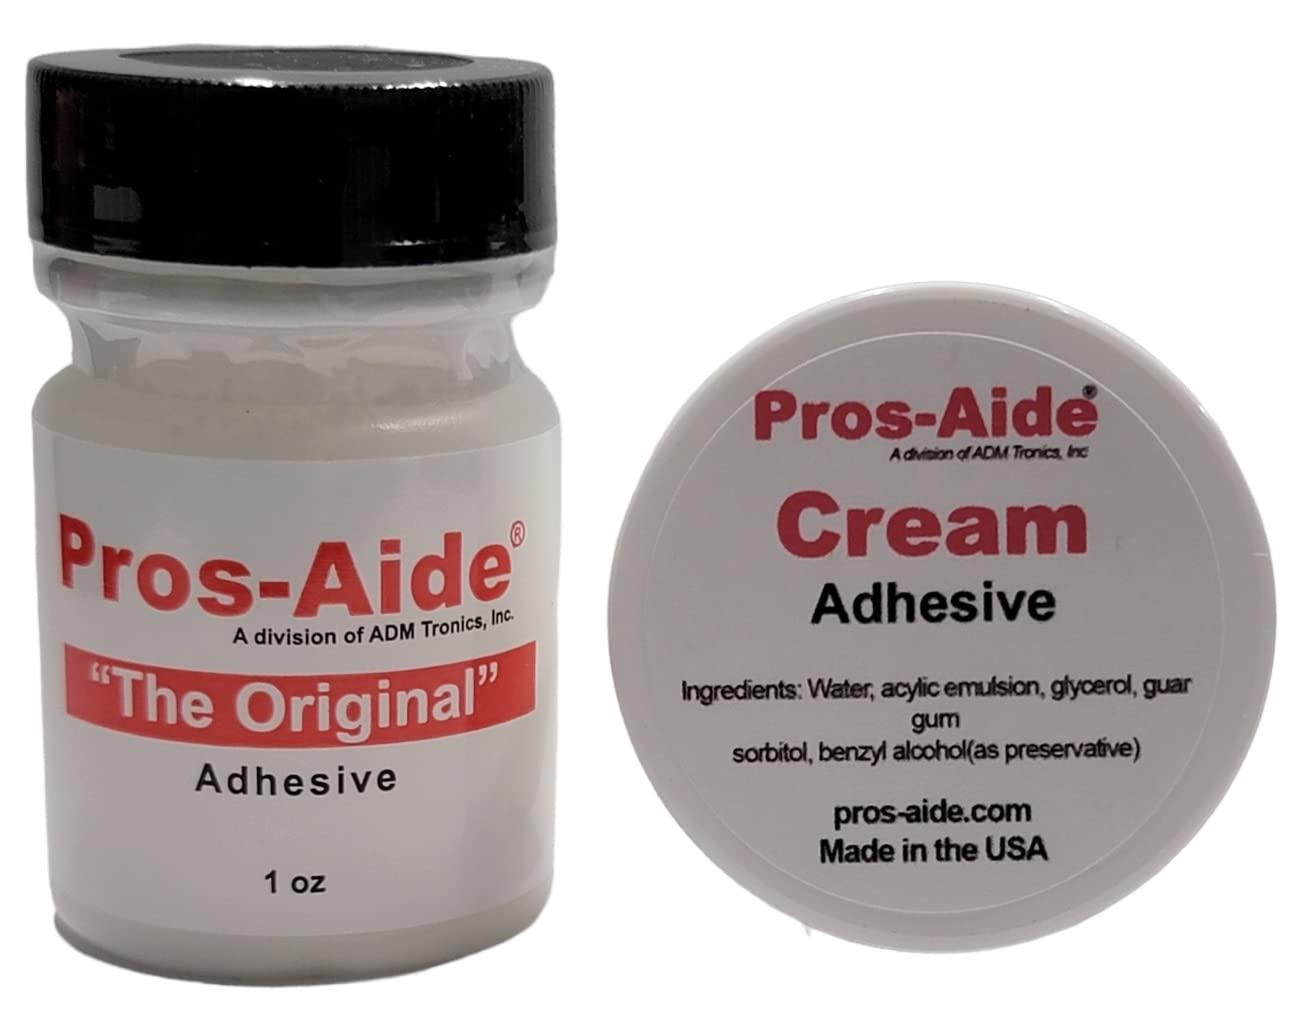 Pros-Aide Adhesive